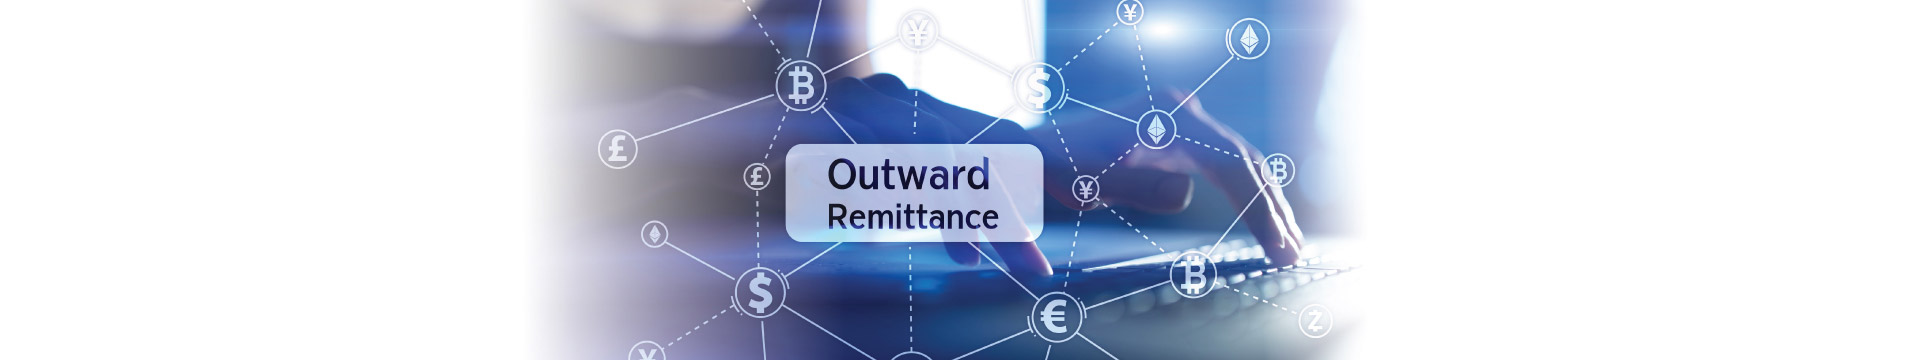 SWIFT Outward Remittance 